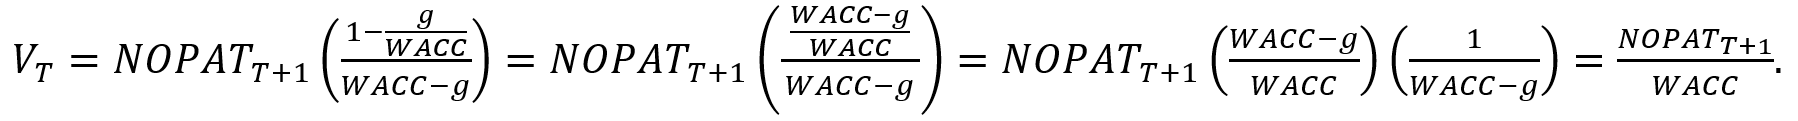 Equation: VT = NOPAT T+1 ((1 - g/RONIC)/(WACC - g)) = NOPAT T+1 (((WACC - g)/WACC)/(WACC - g)) = NOPAT T+1 ((WACC - g)/WACC)(1/(WACC - g)) = (NOPAT T+1)/WACC.